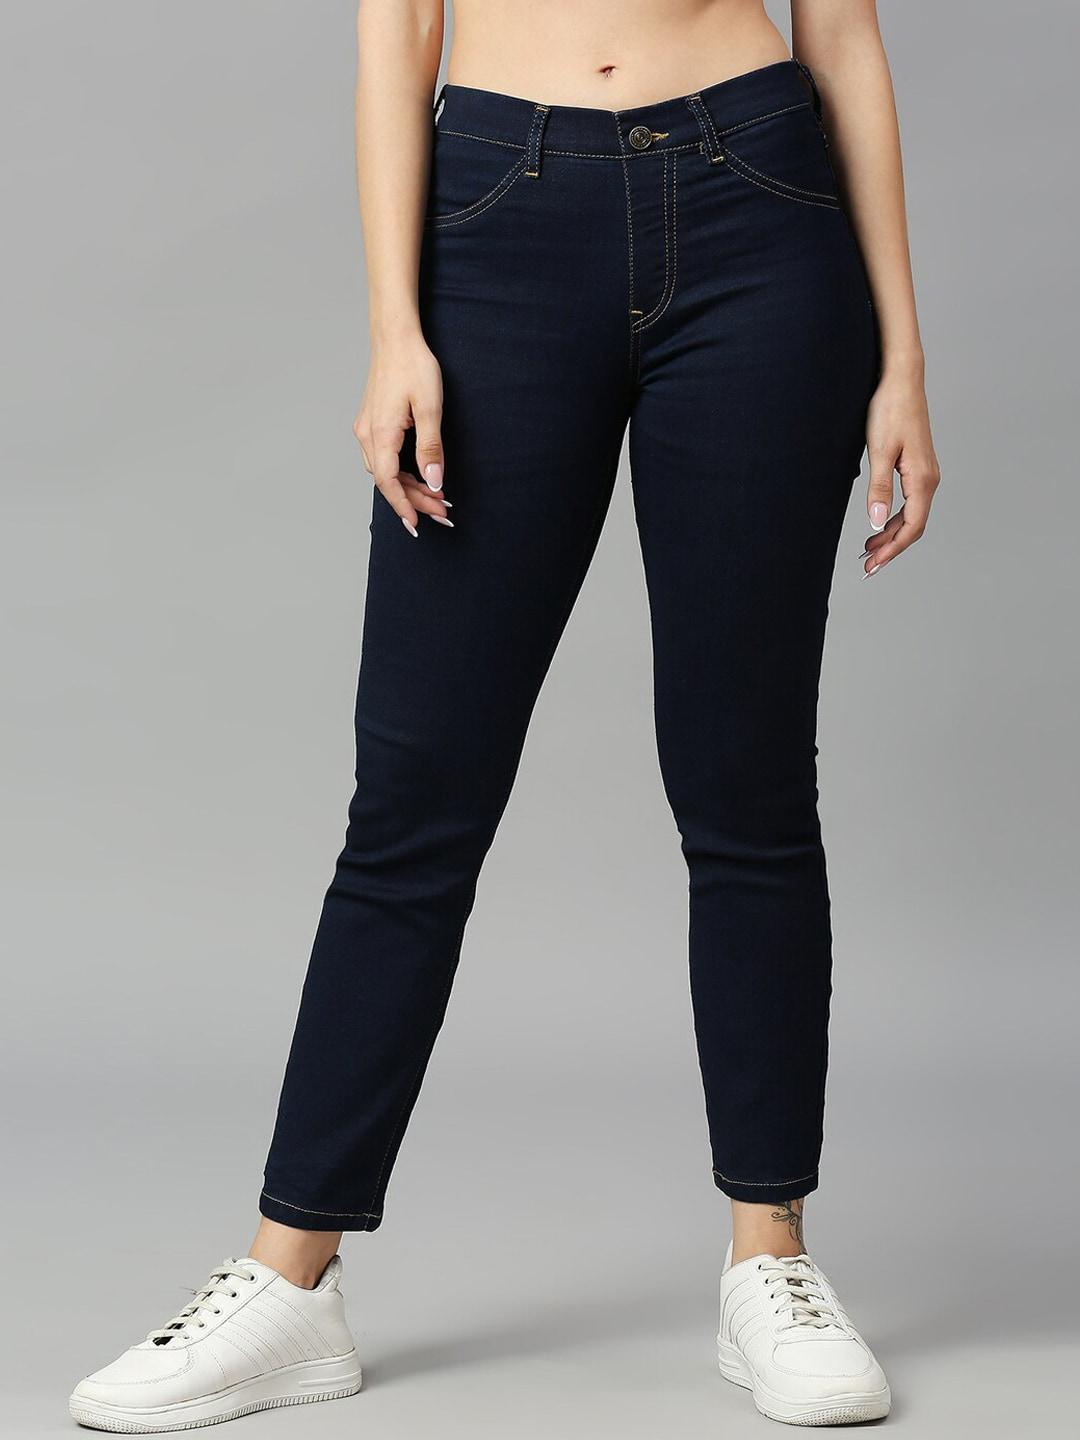 tarama clean look slim fit cotton jeans